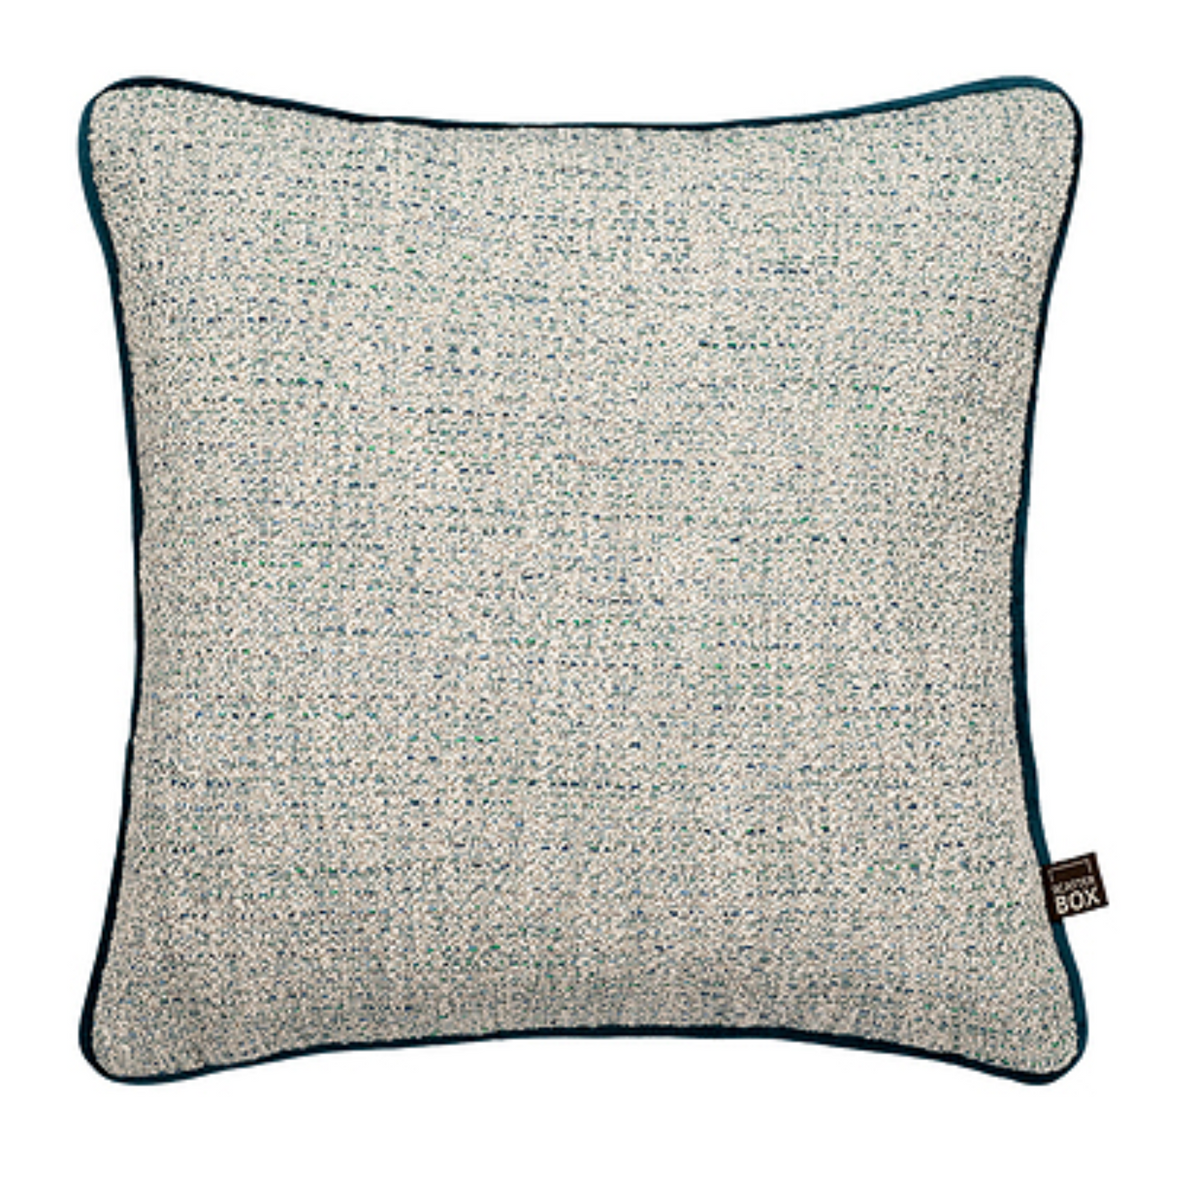 Scatterbox Leah Green Cushion 43cm x 43cm